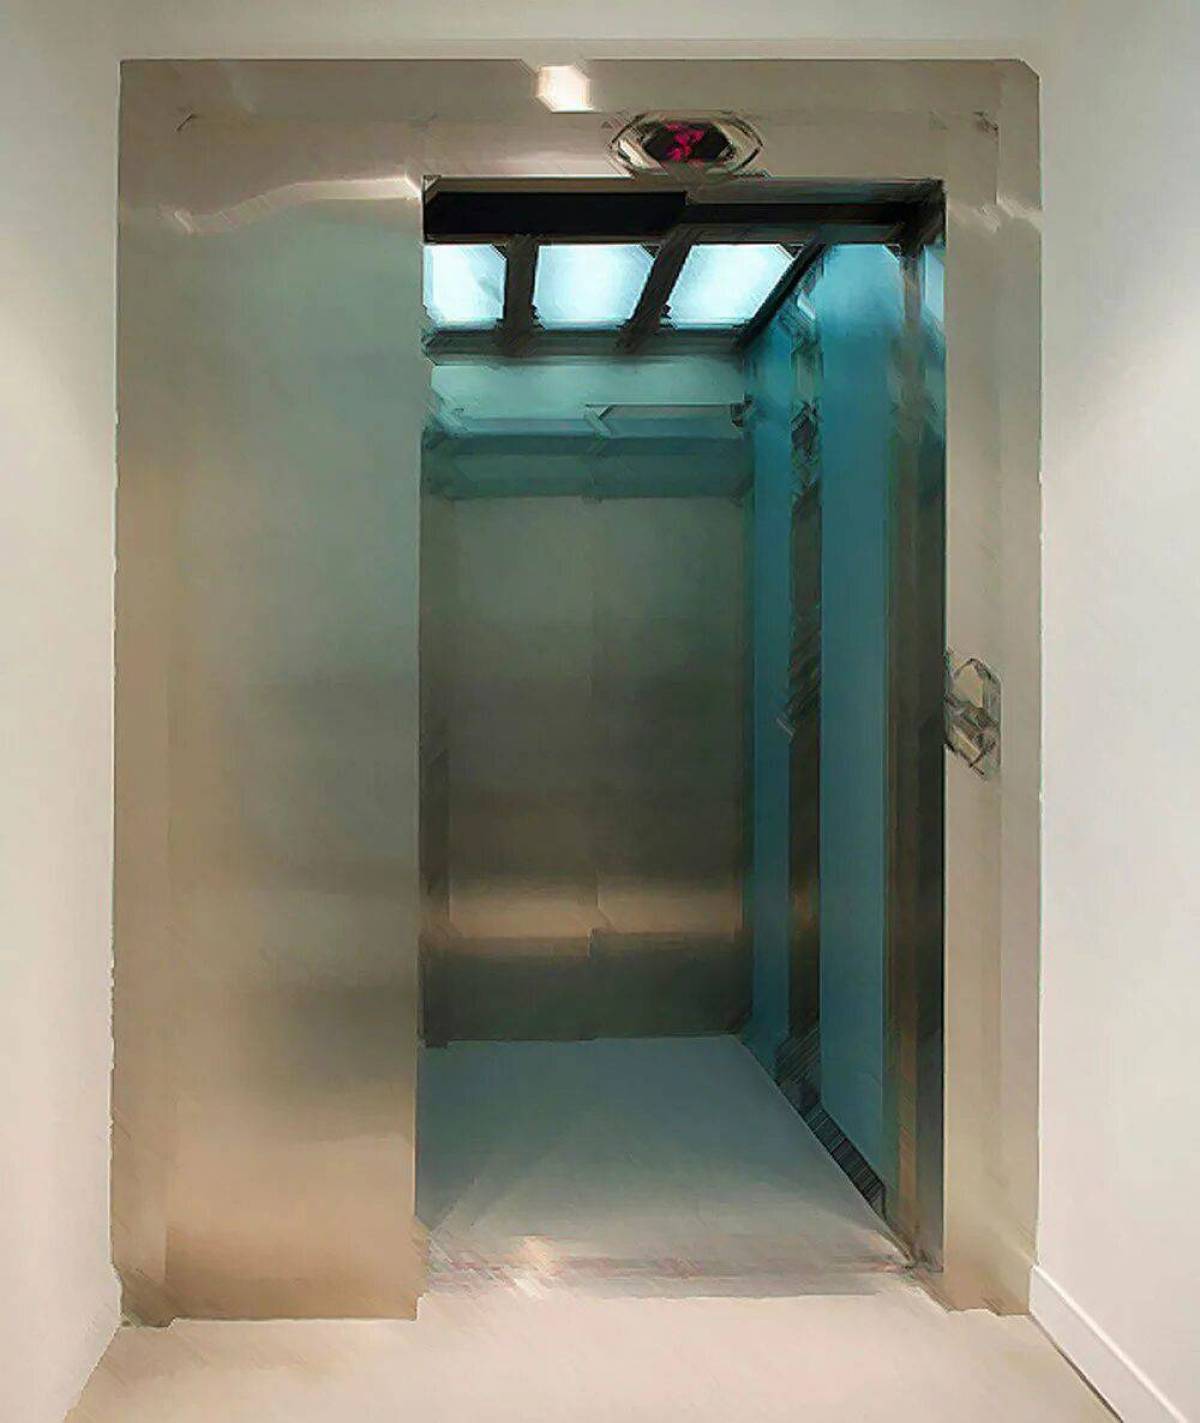 Its door. Лифт. Двери лифта. Открытый лифт. Пассажирский лифт.